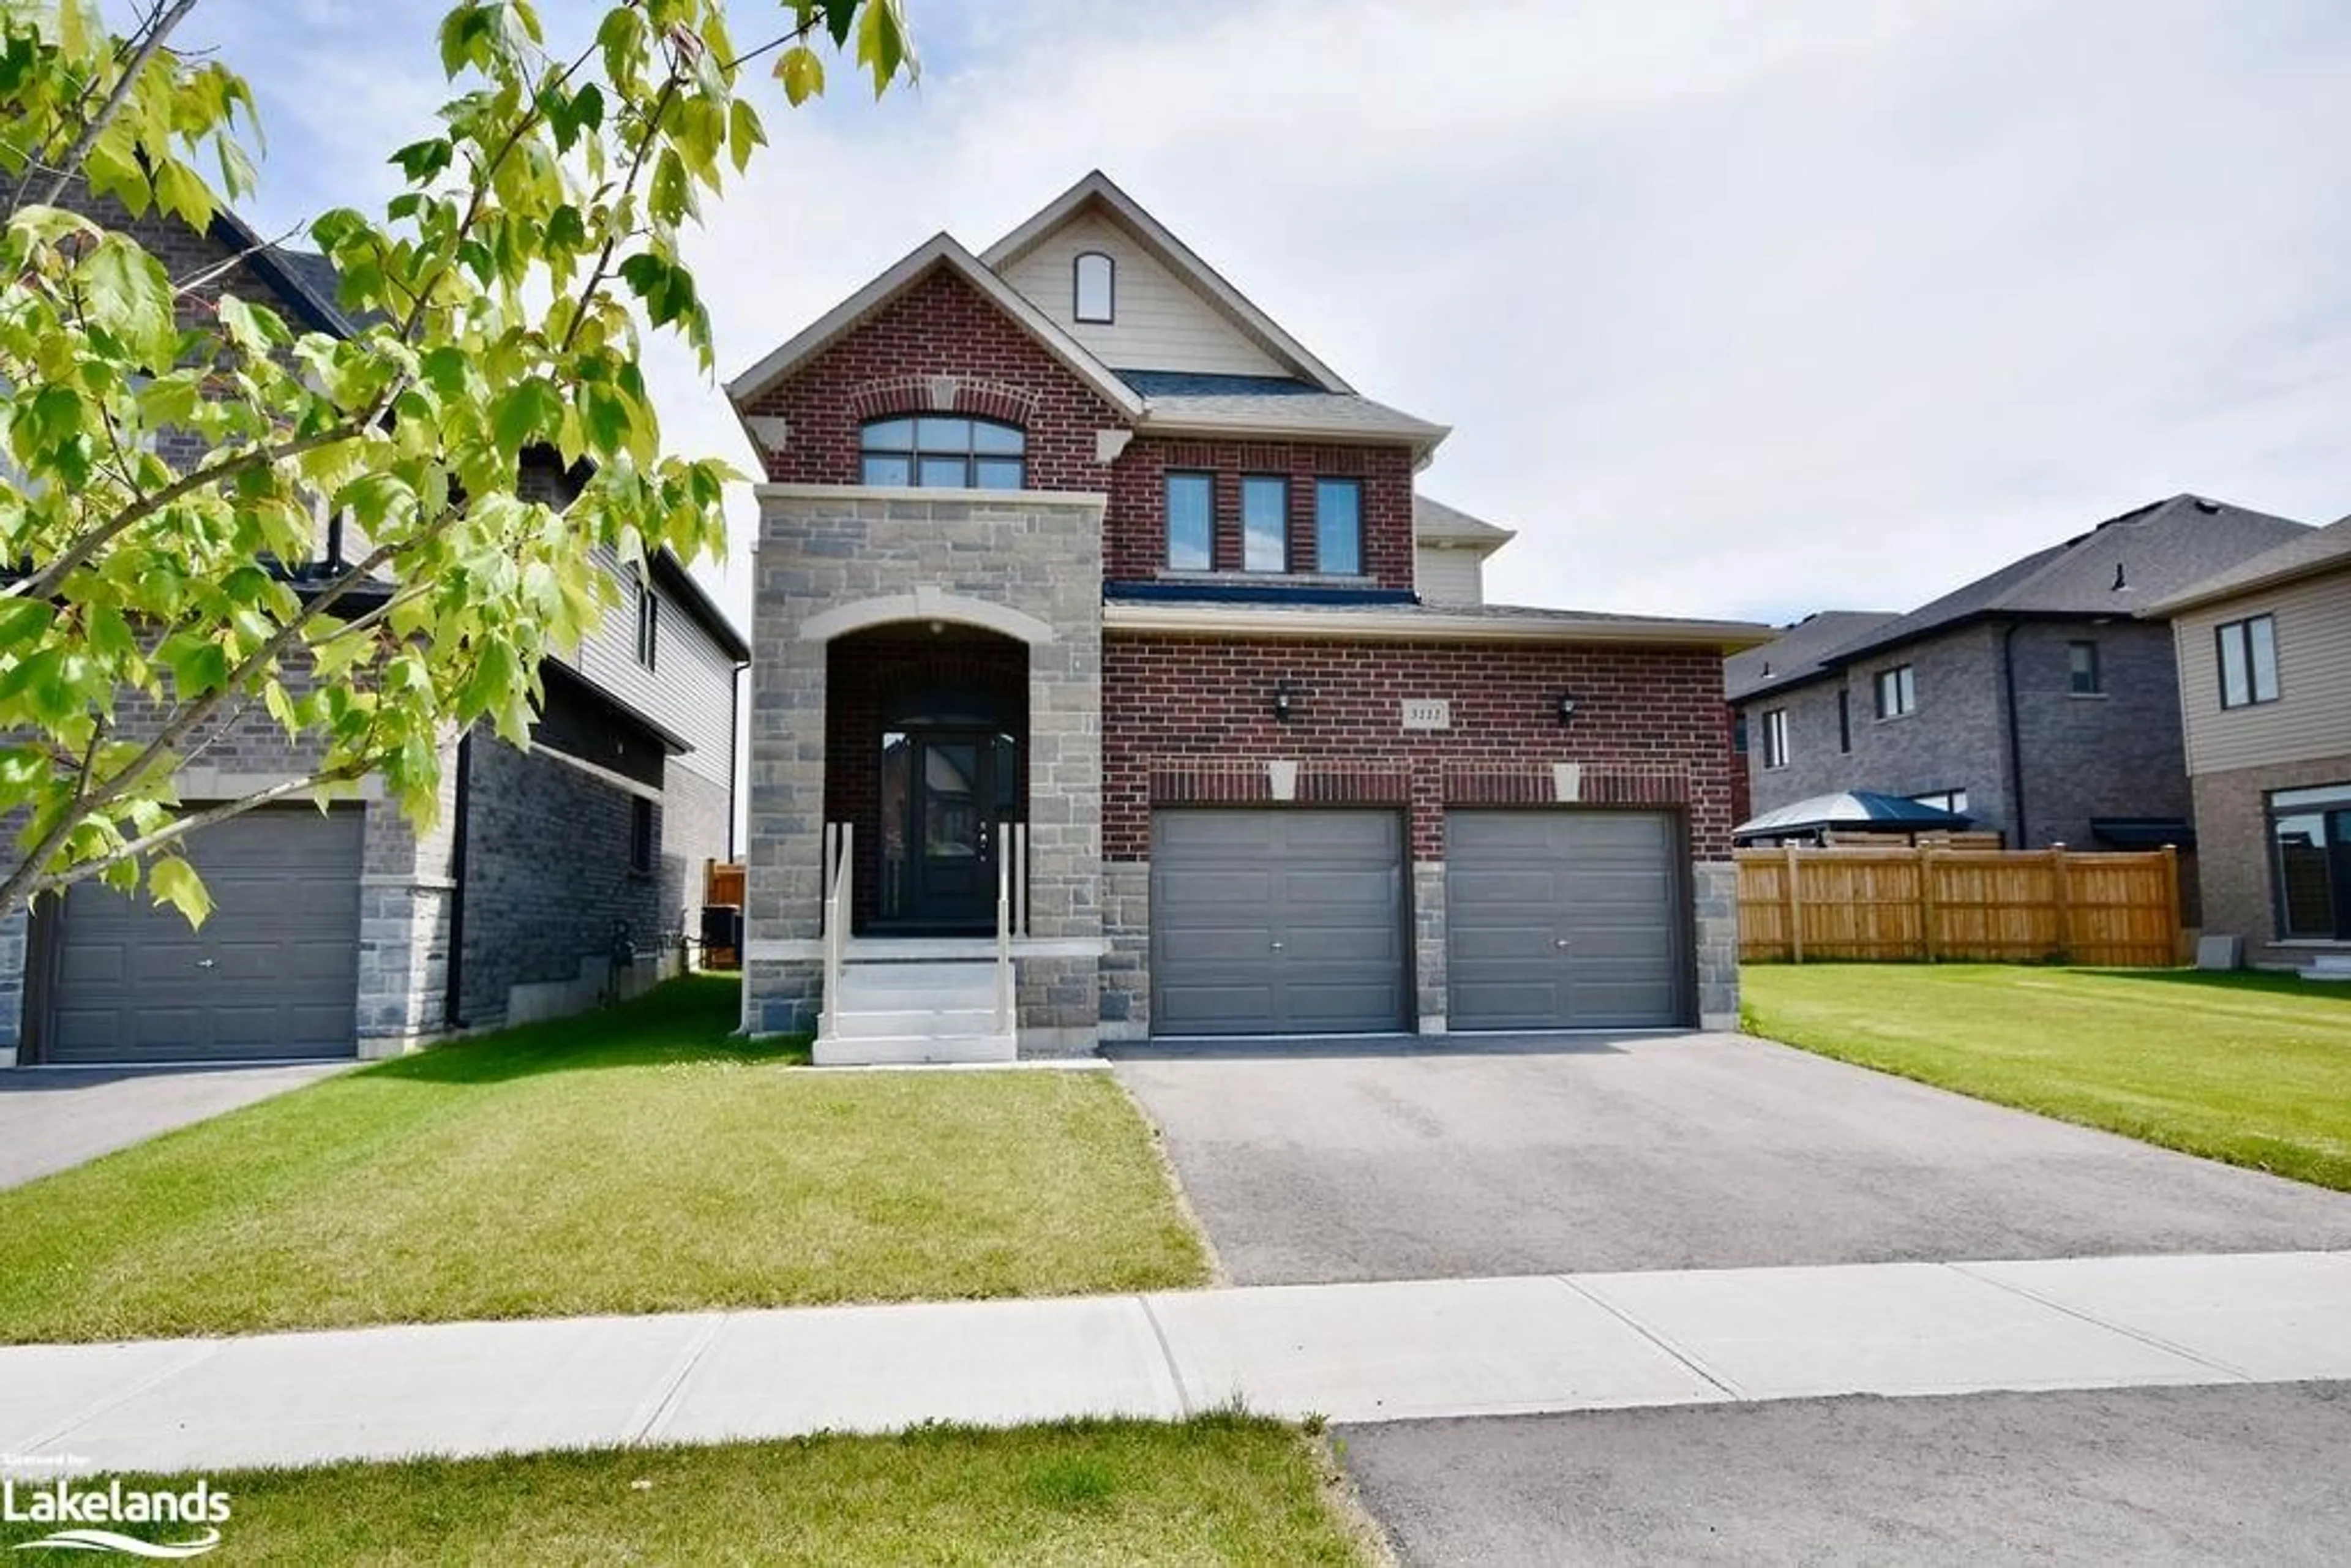 Home with brick exterior material for 3111 Orion Blvd, Orillia Ontario L3V 8L8